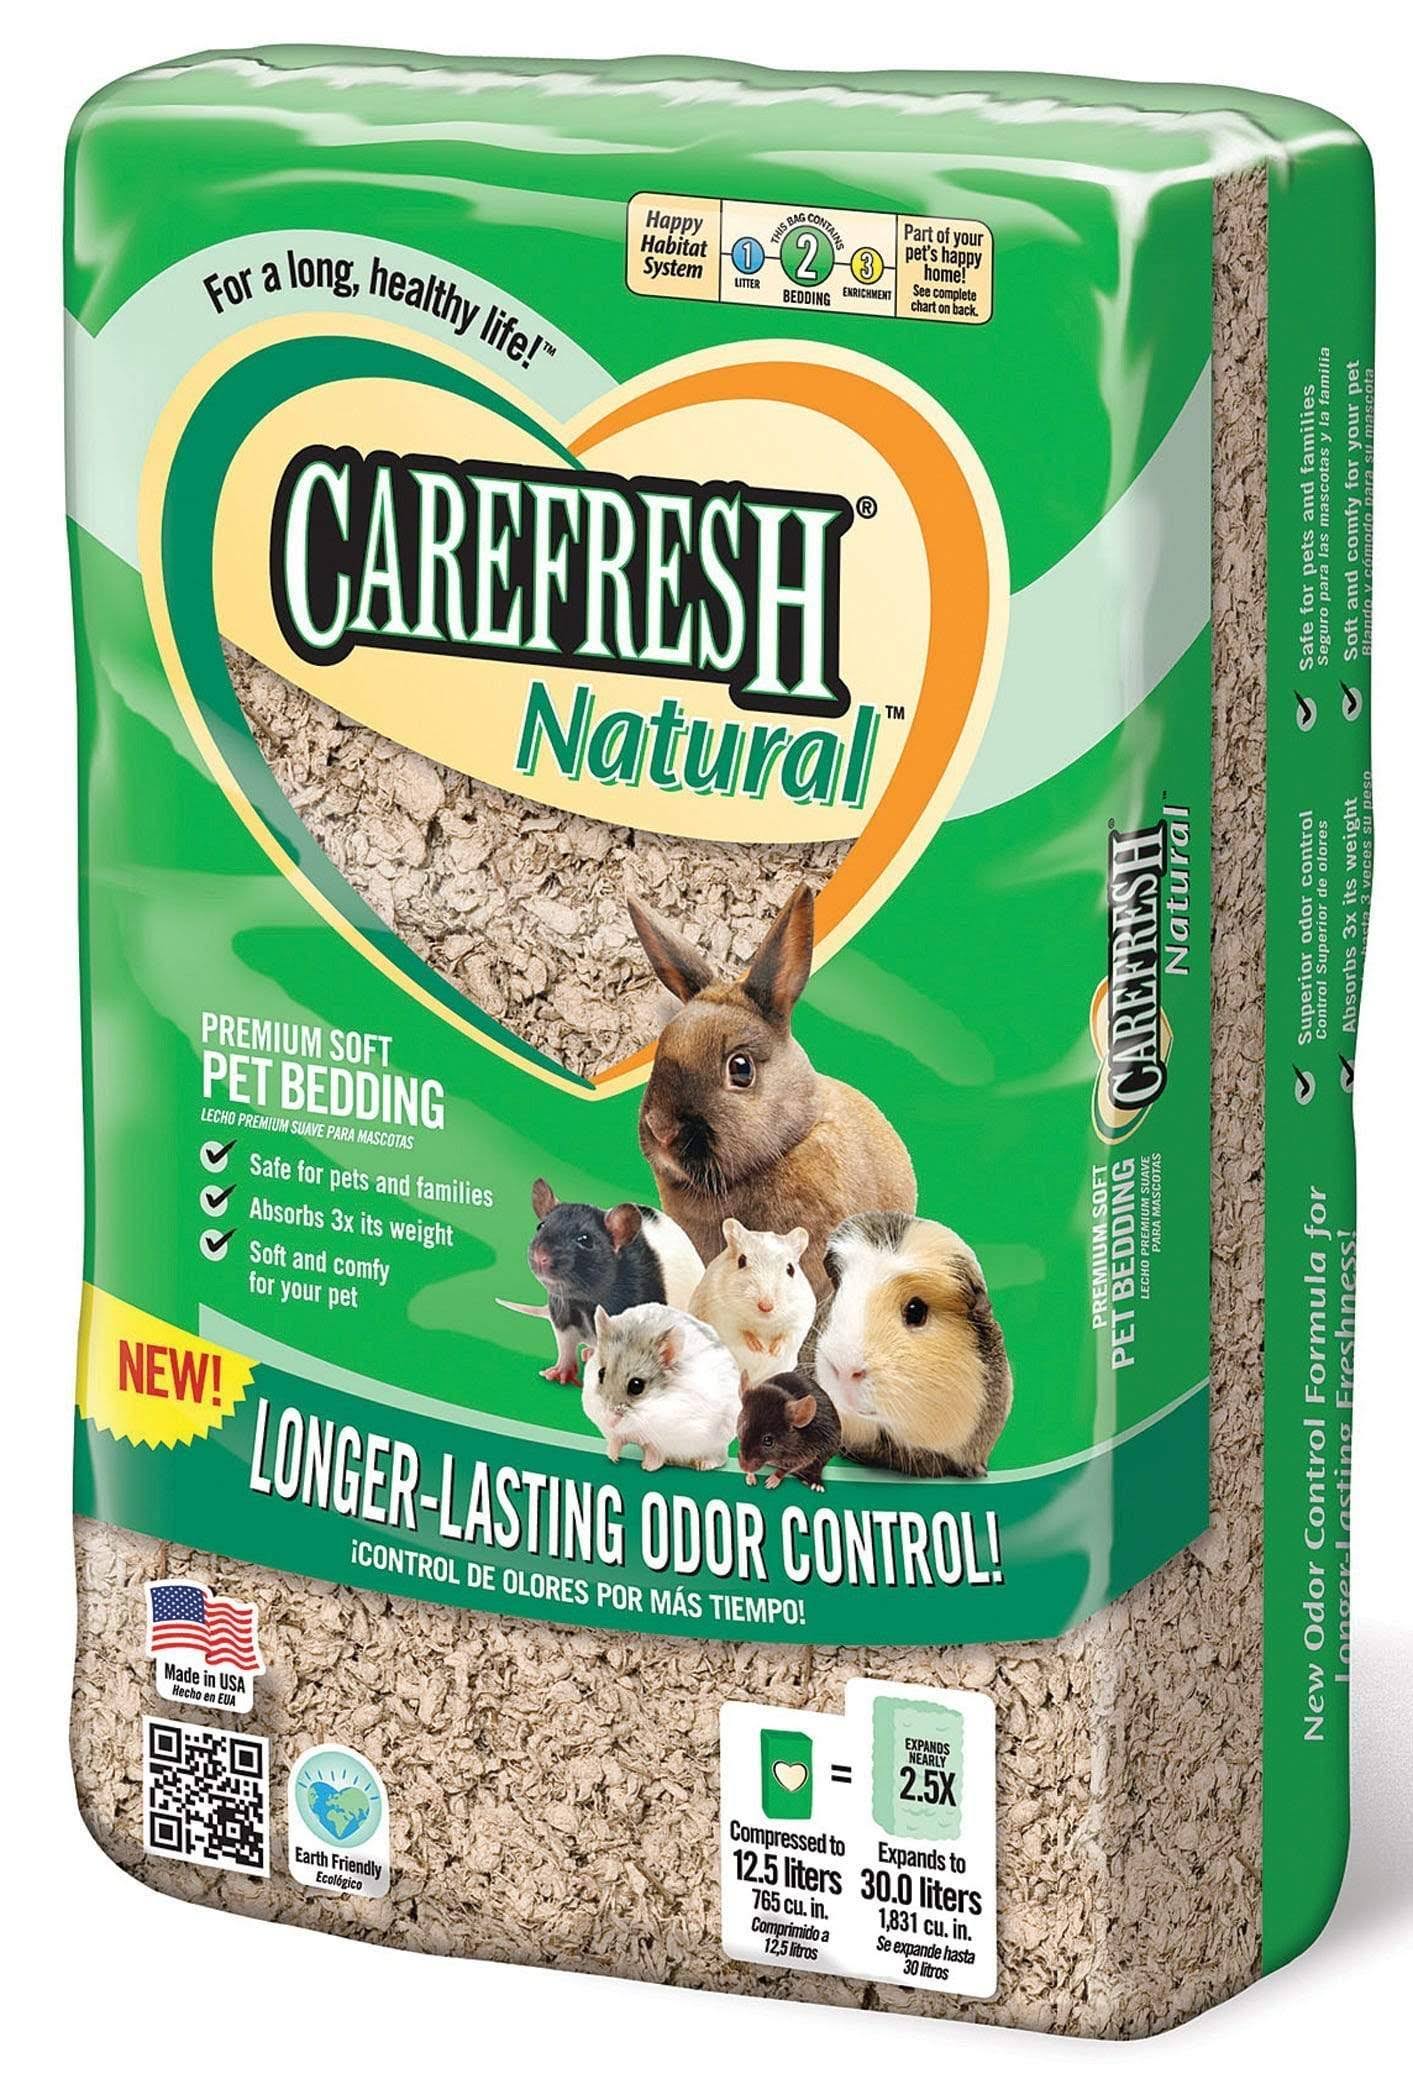 Carefresh Complete Pet Bedding